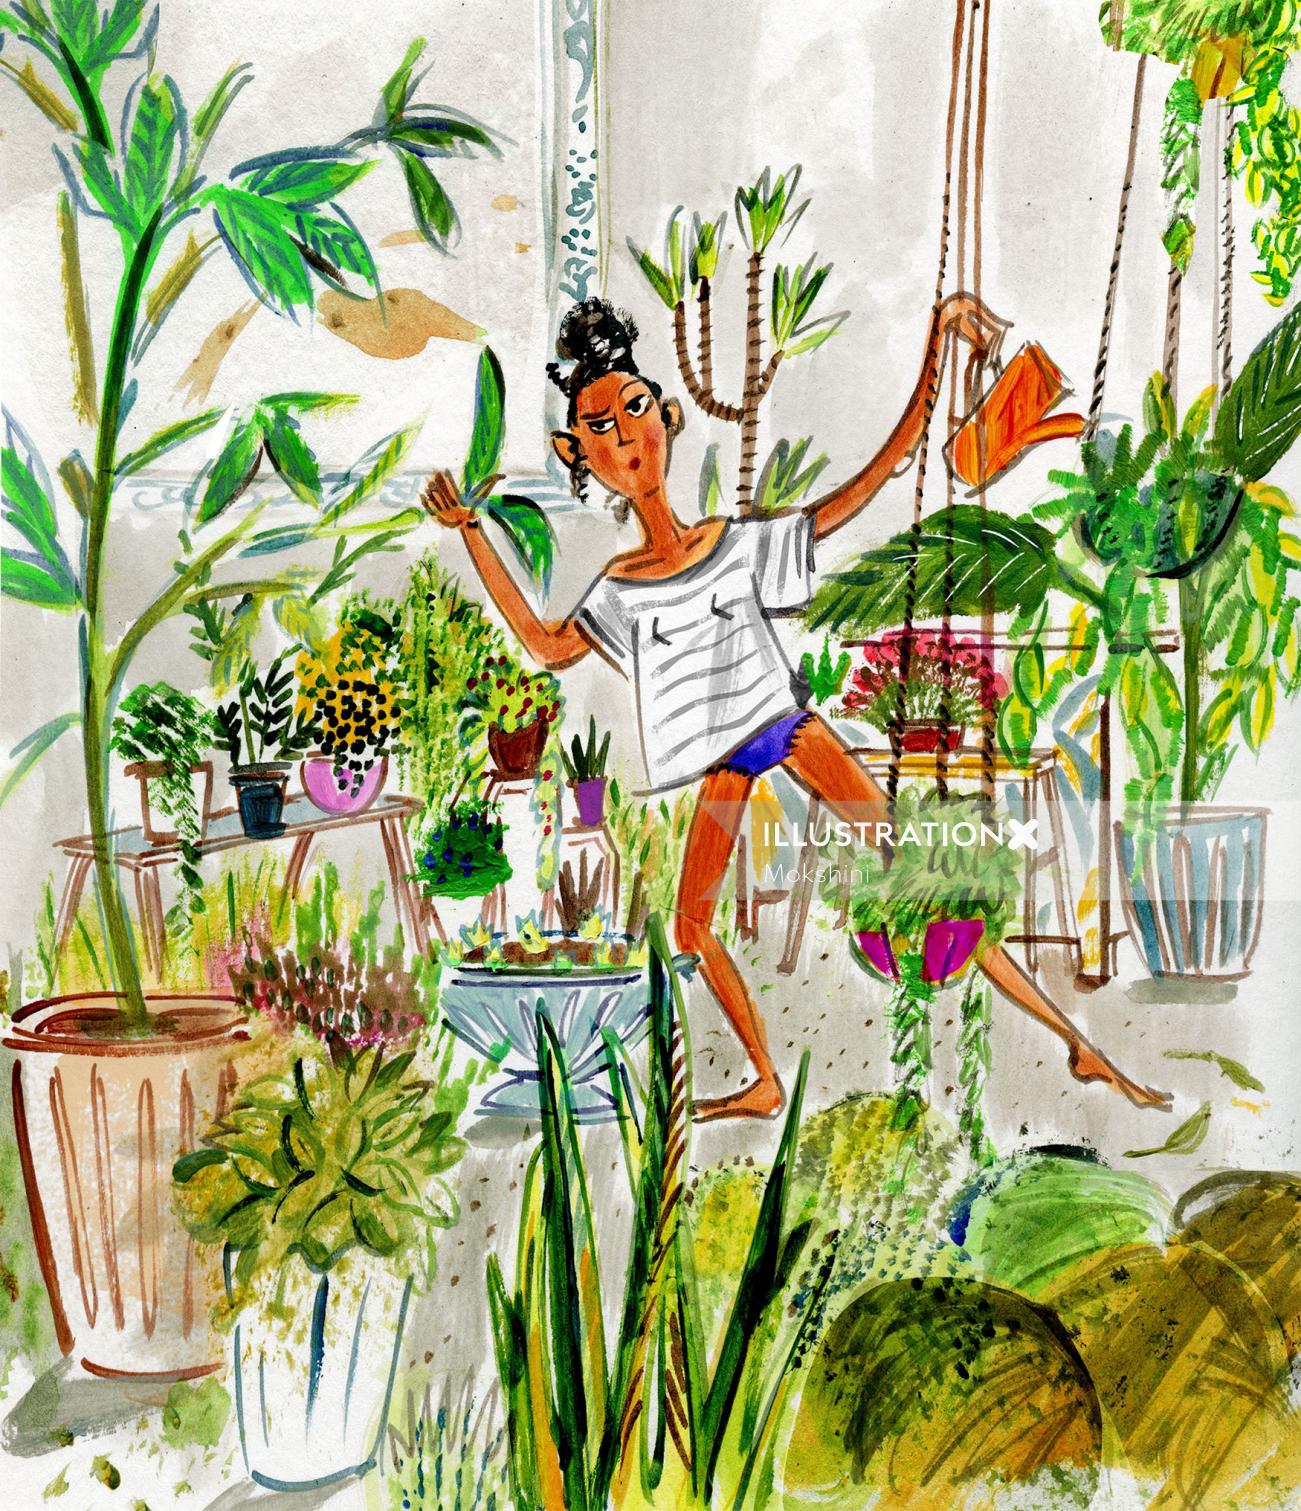 Lifestyle illustration of The plant whisperer